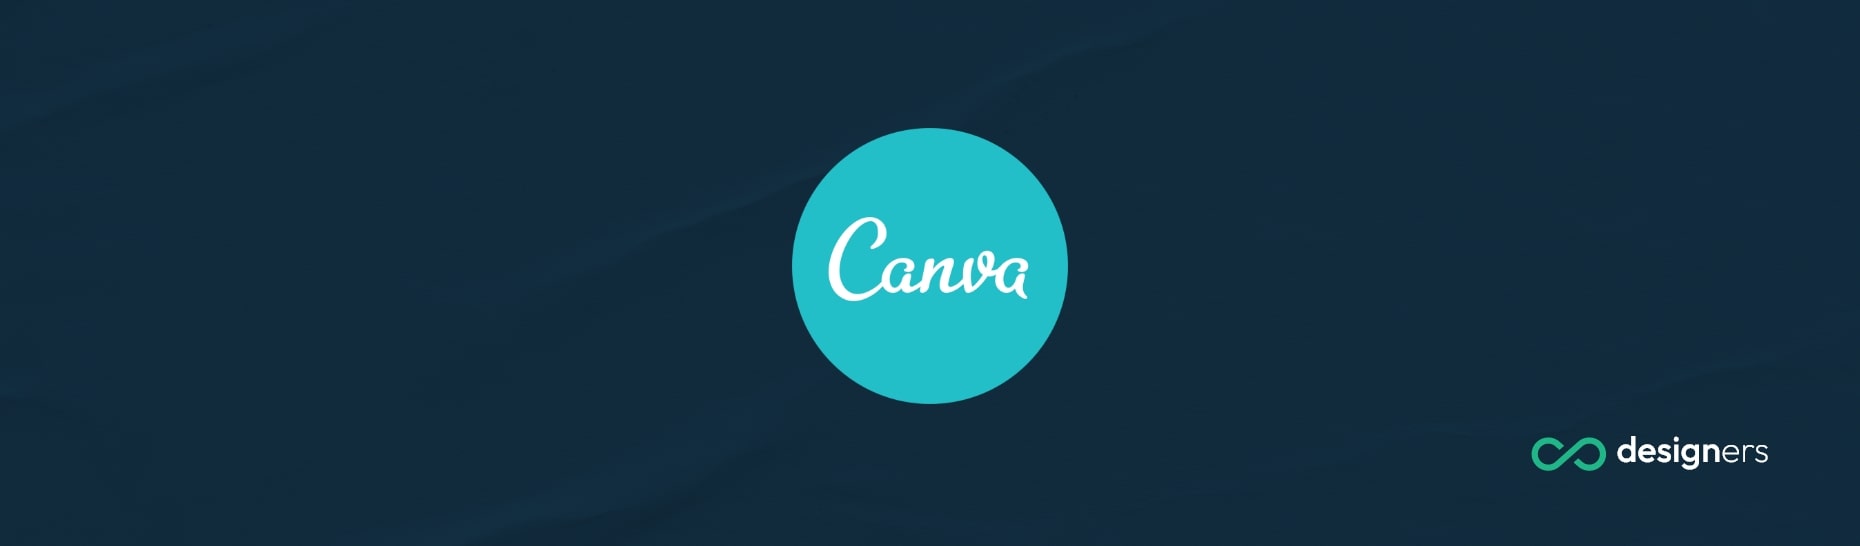 Does Canva Work on iPad?